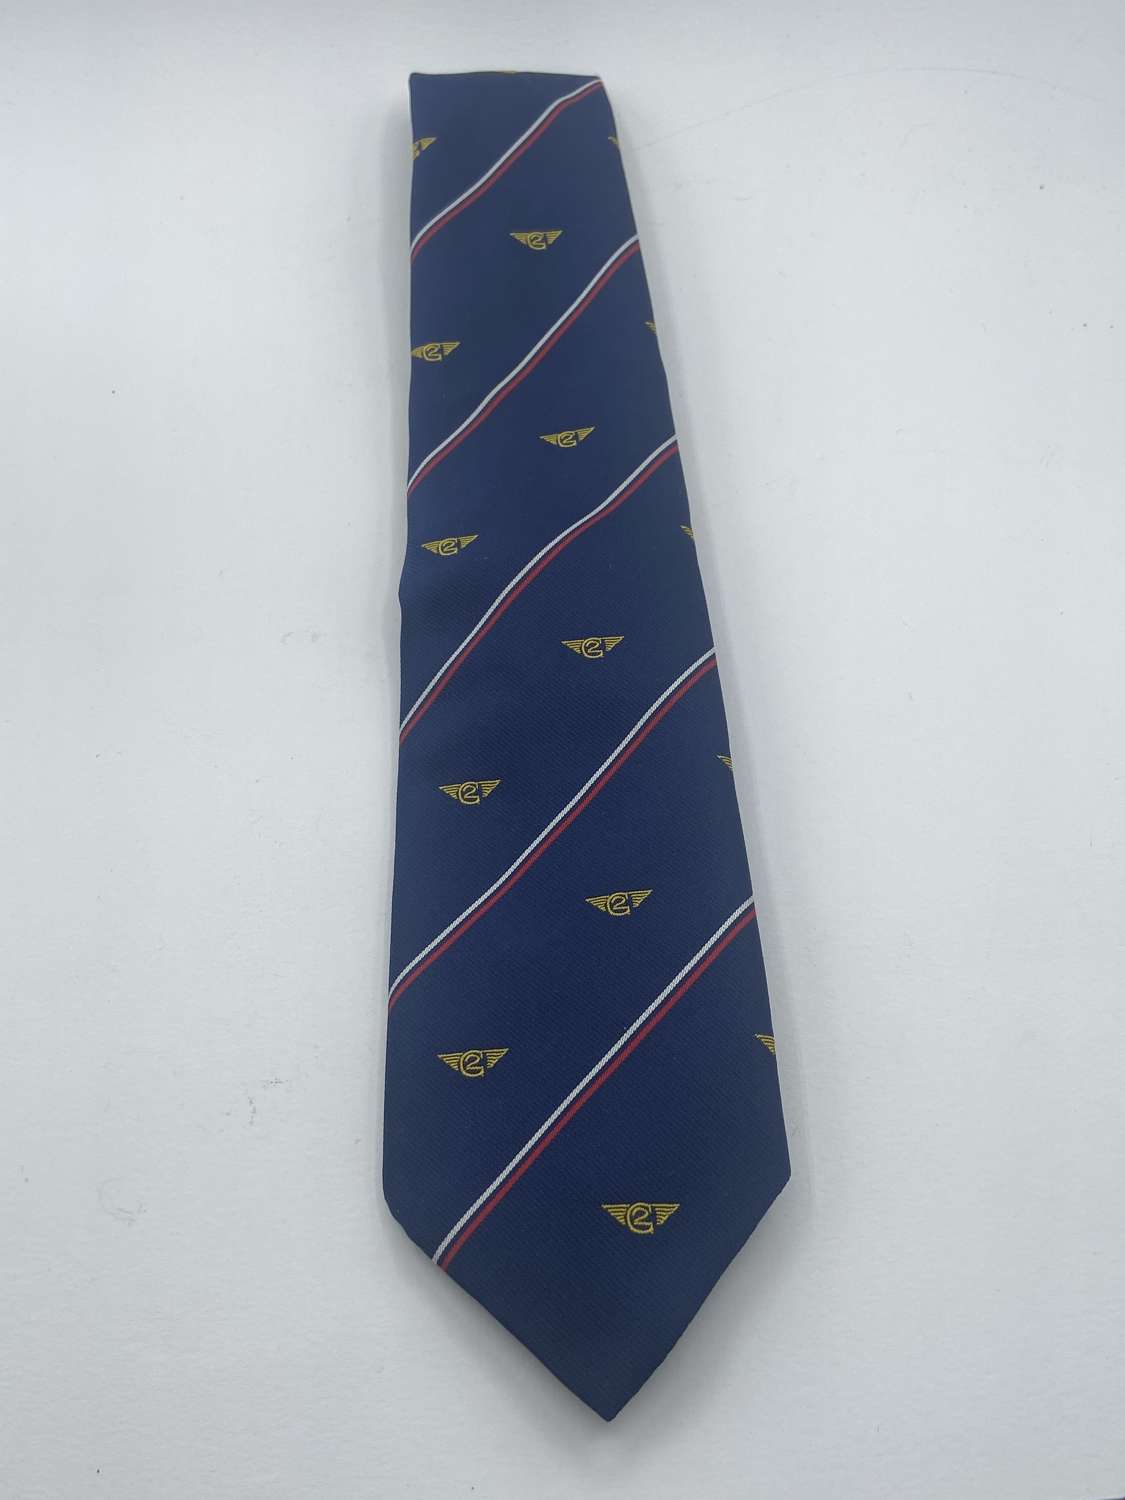 Post WW2 RAF Commemorative Royal Air Force Tie By Crest Ties Ltd